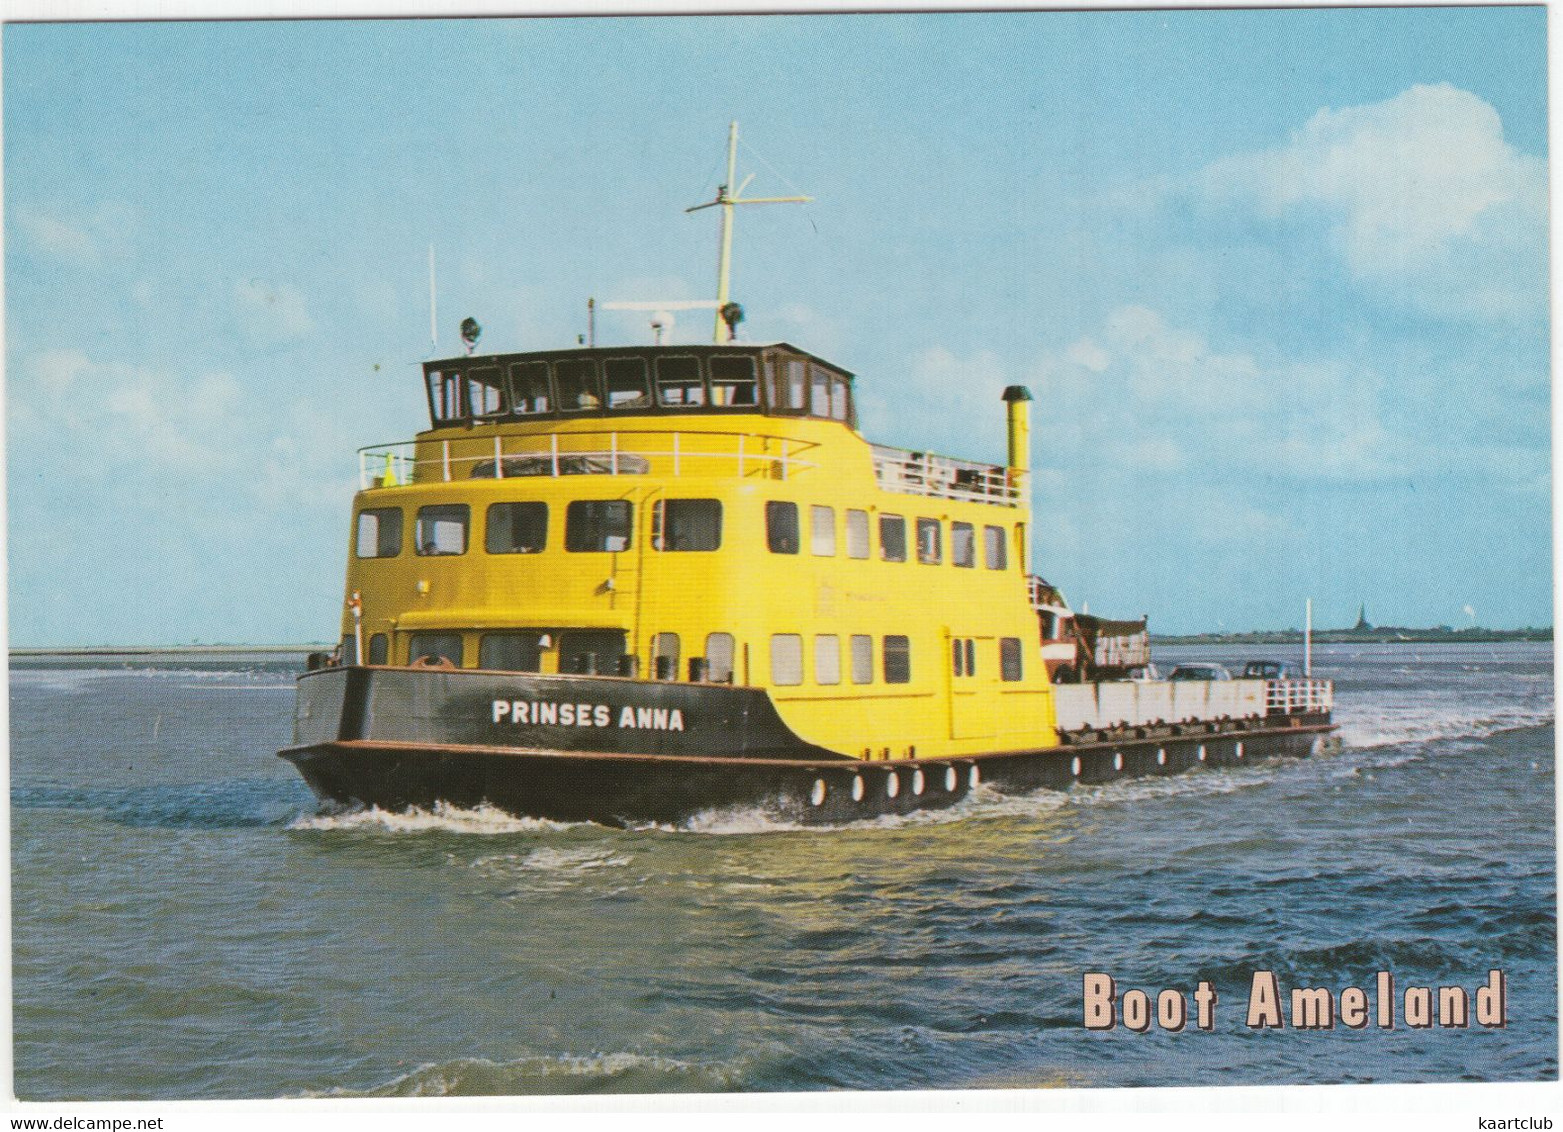 Ameland - Boot Ameland: 'Prinses Anna' - Veerboot / Ferry - (Ameland, Wadden, Nederland) - Nr. AMD 69 - Ameland